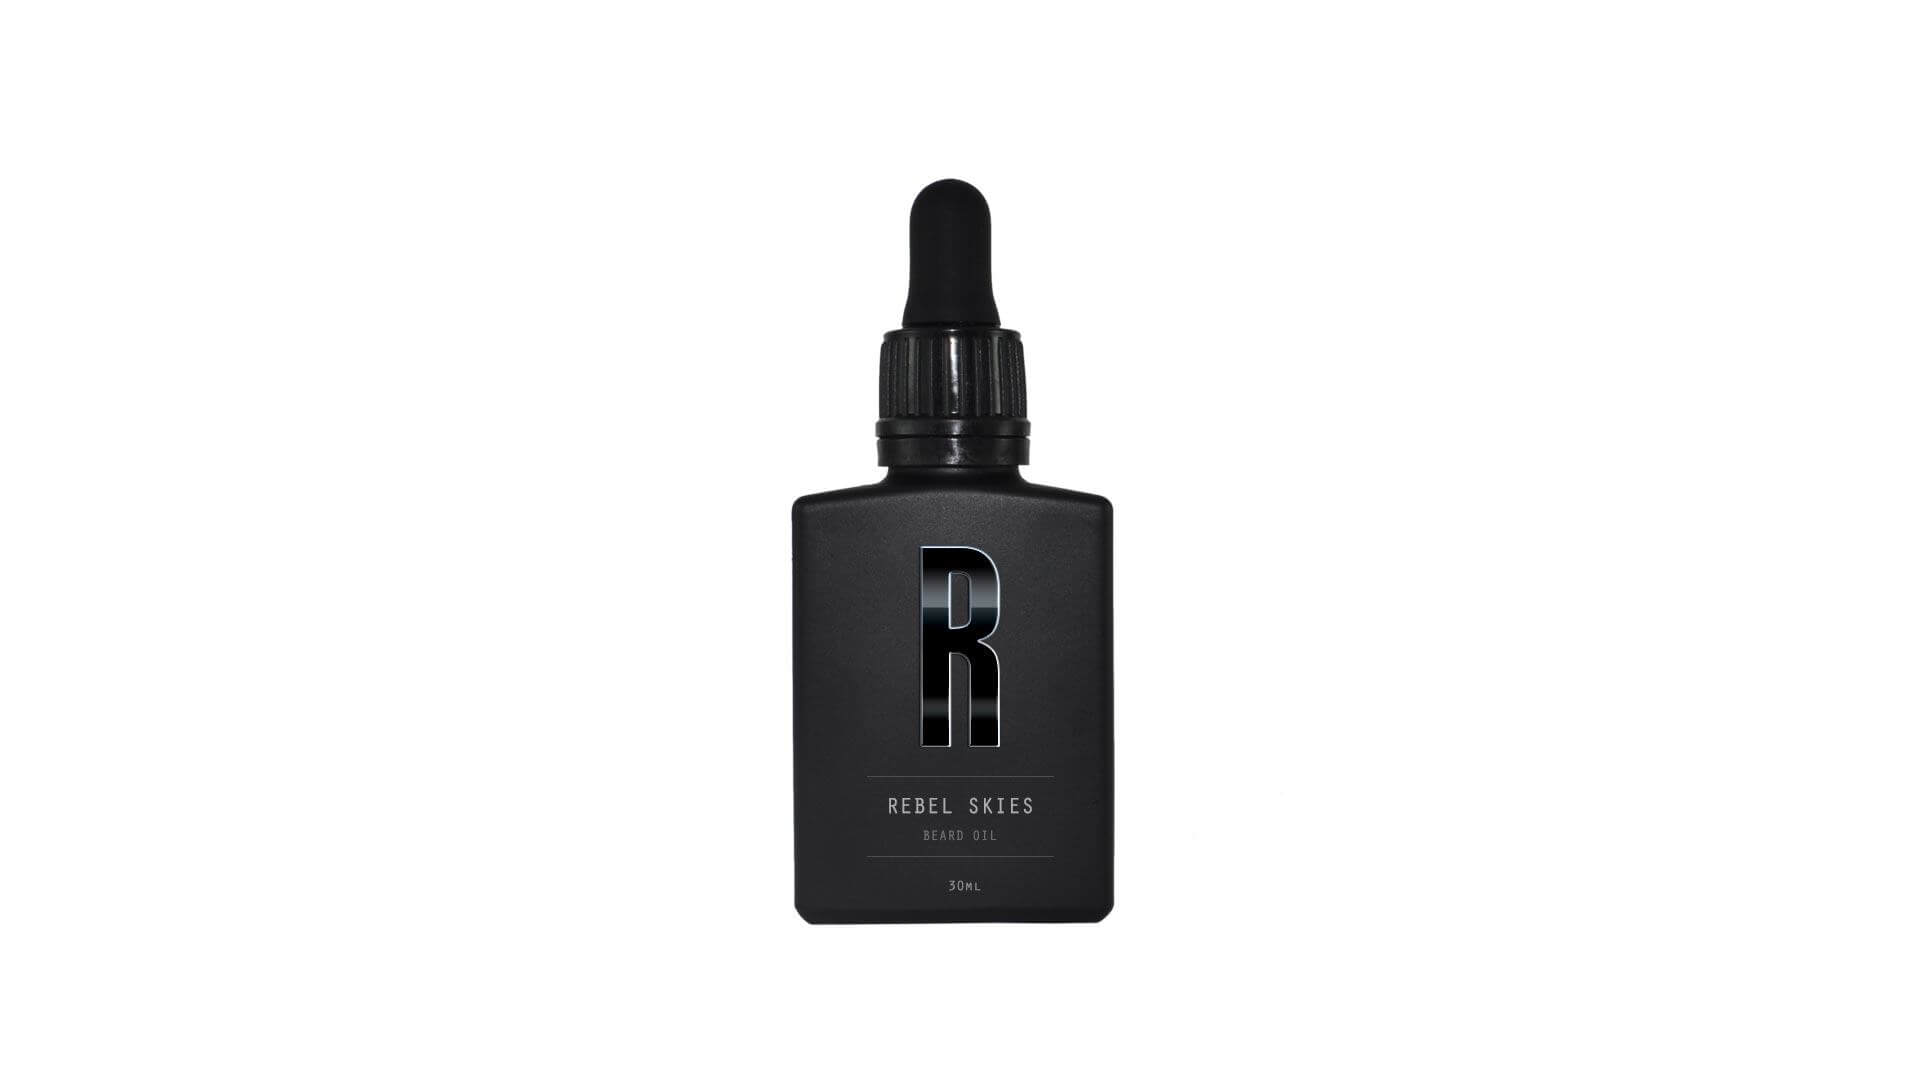 Single bottle of Rebel Skies Beard Oil - Premium beard care oil from Beardifulman